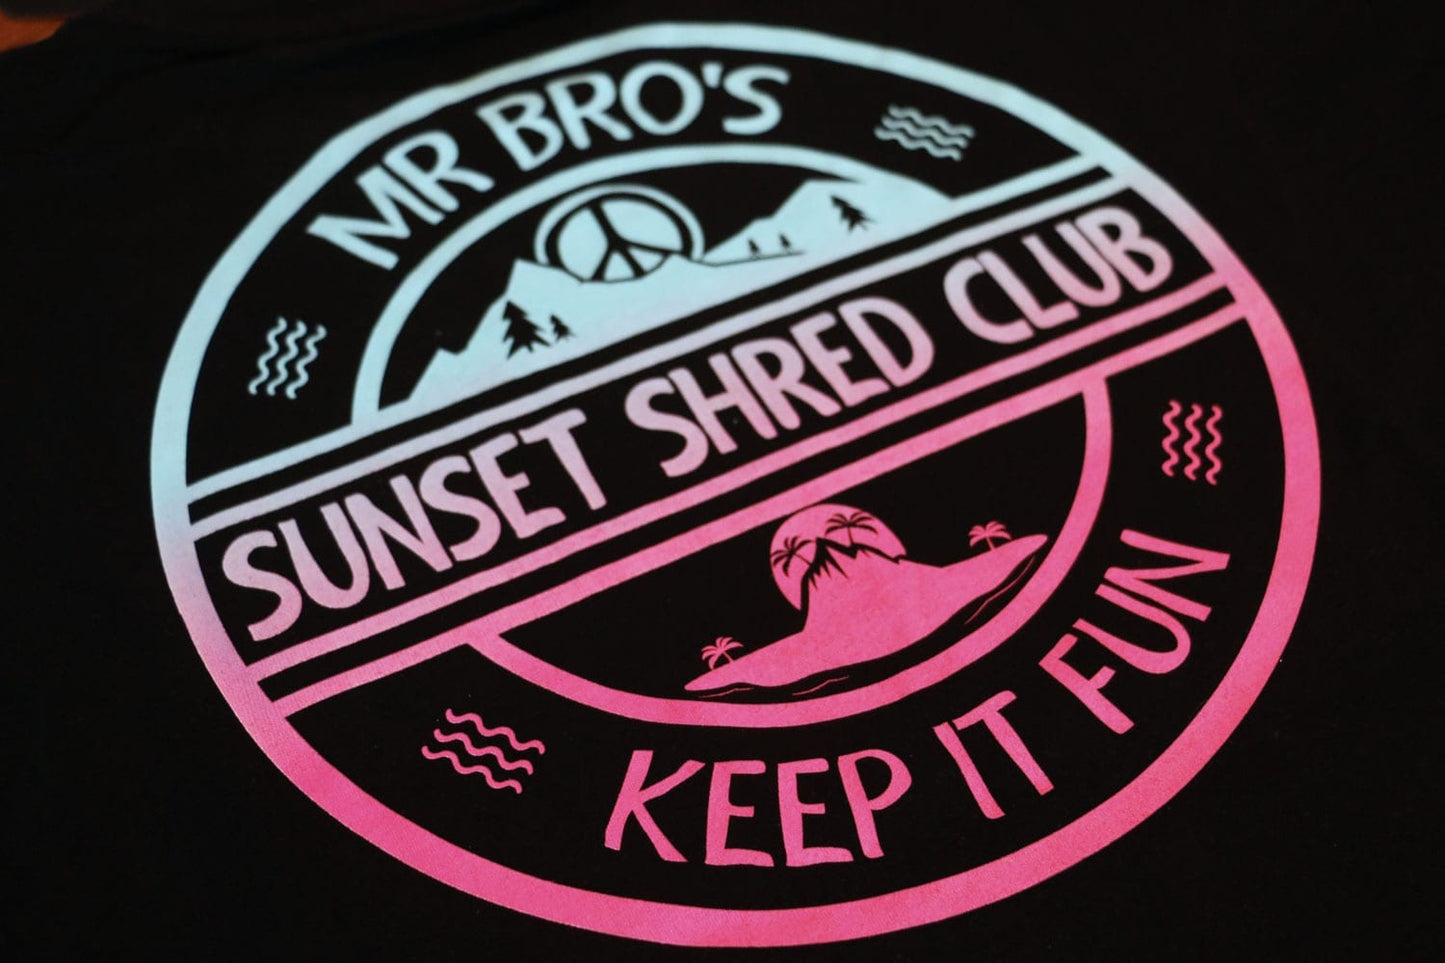 Sunset Shred Club Longsleeve (Retro Fade)